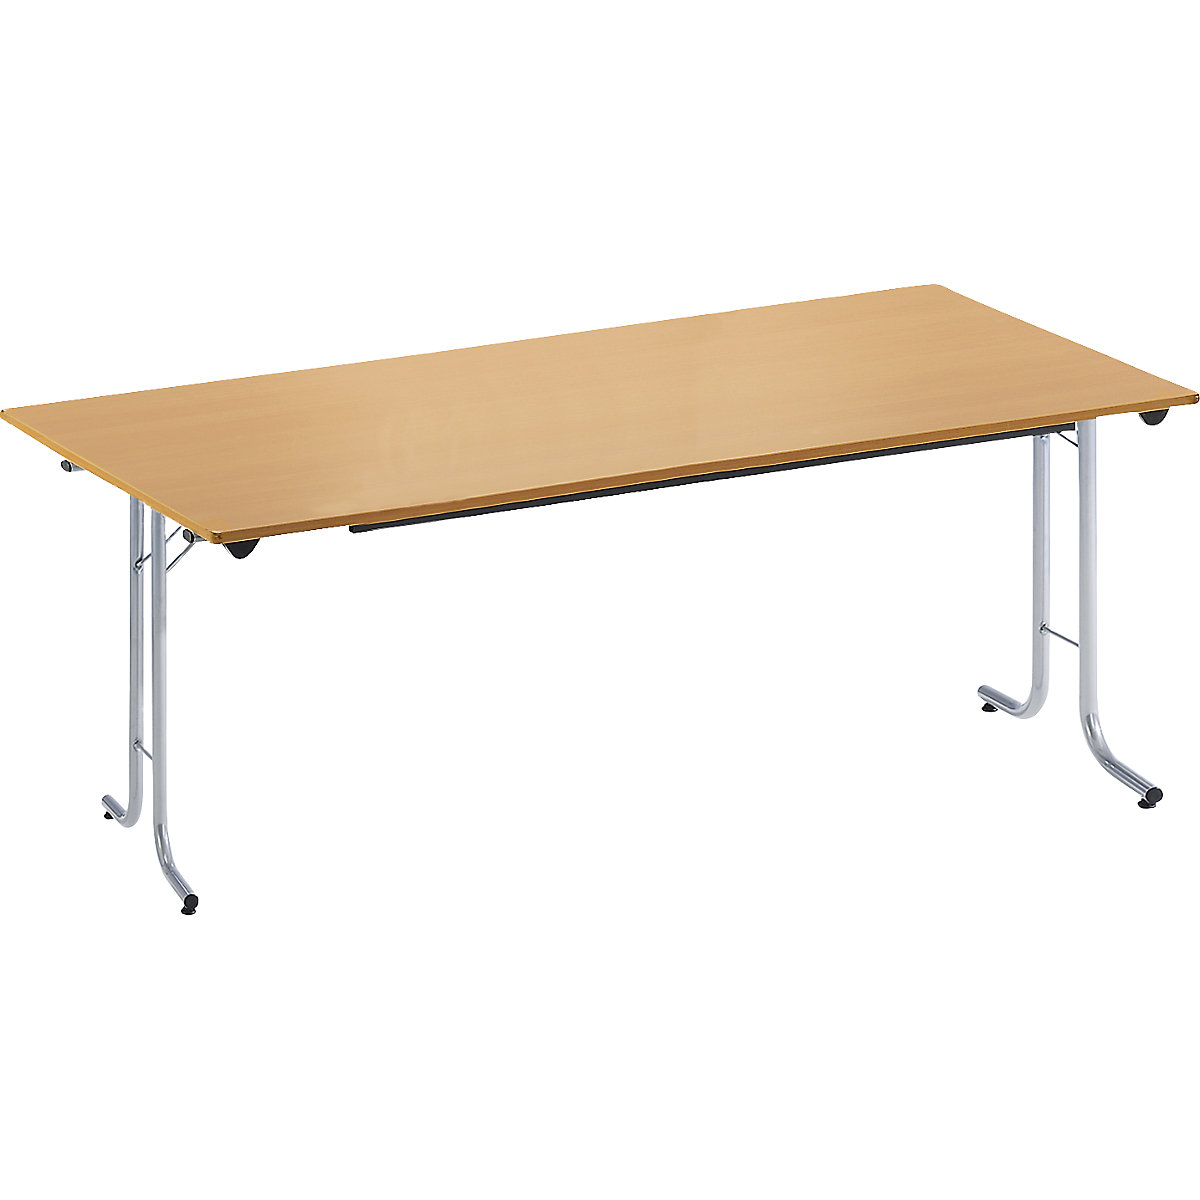 Folding table, with rounded edges, round tubular frame, rectangular top, 1600 x 700 mm, aluminium coloured frame, beech finish tabletop-17